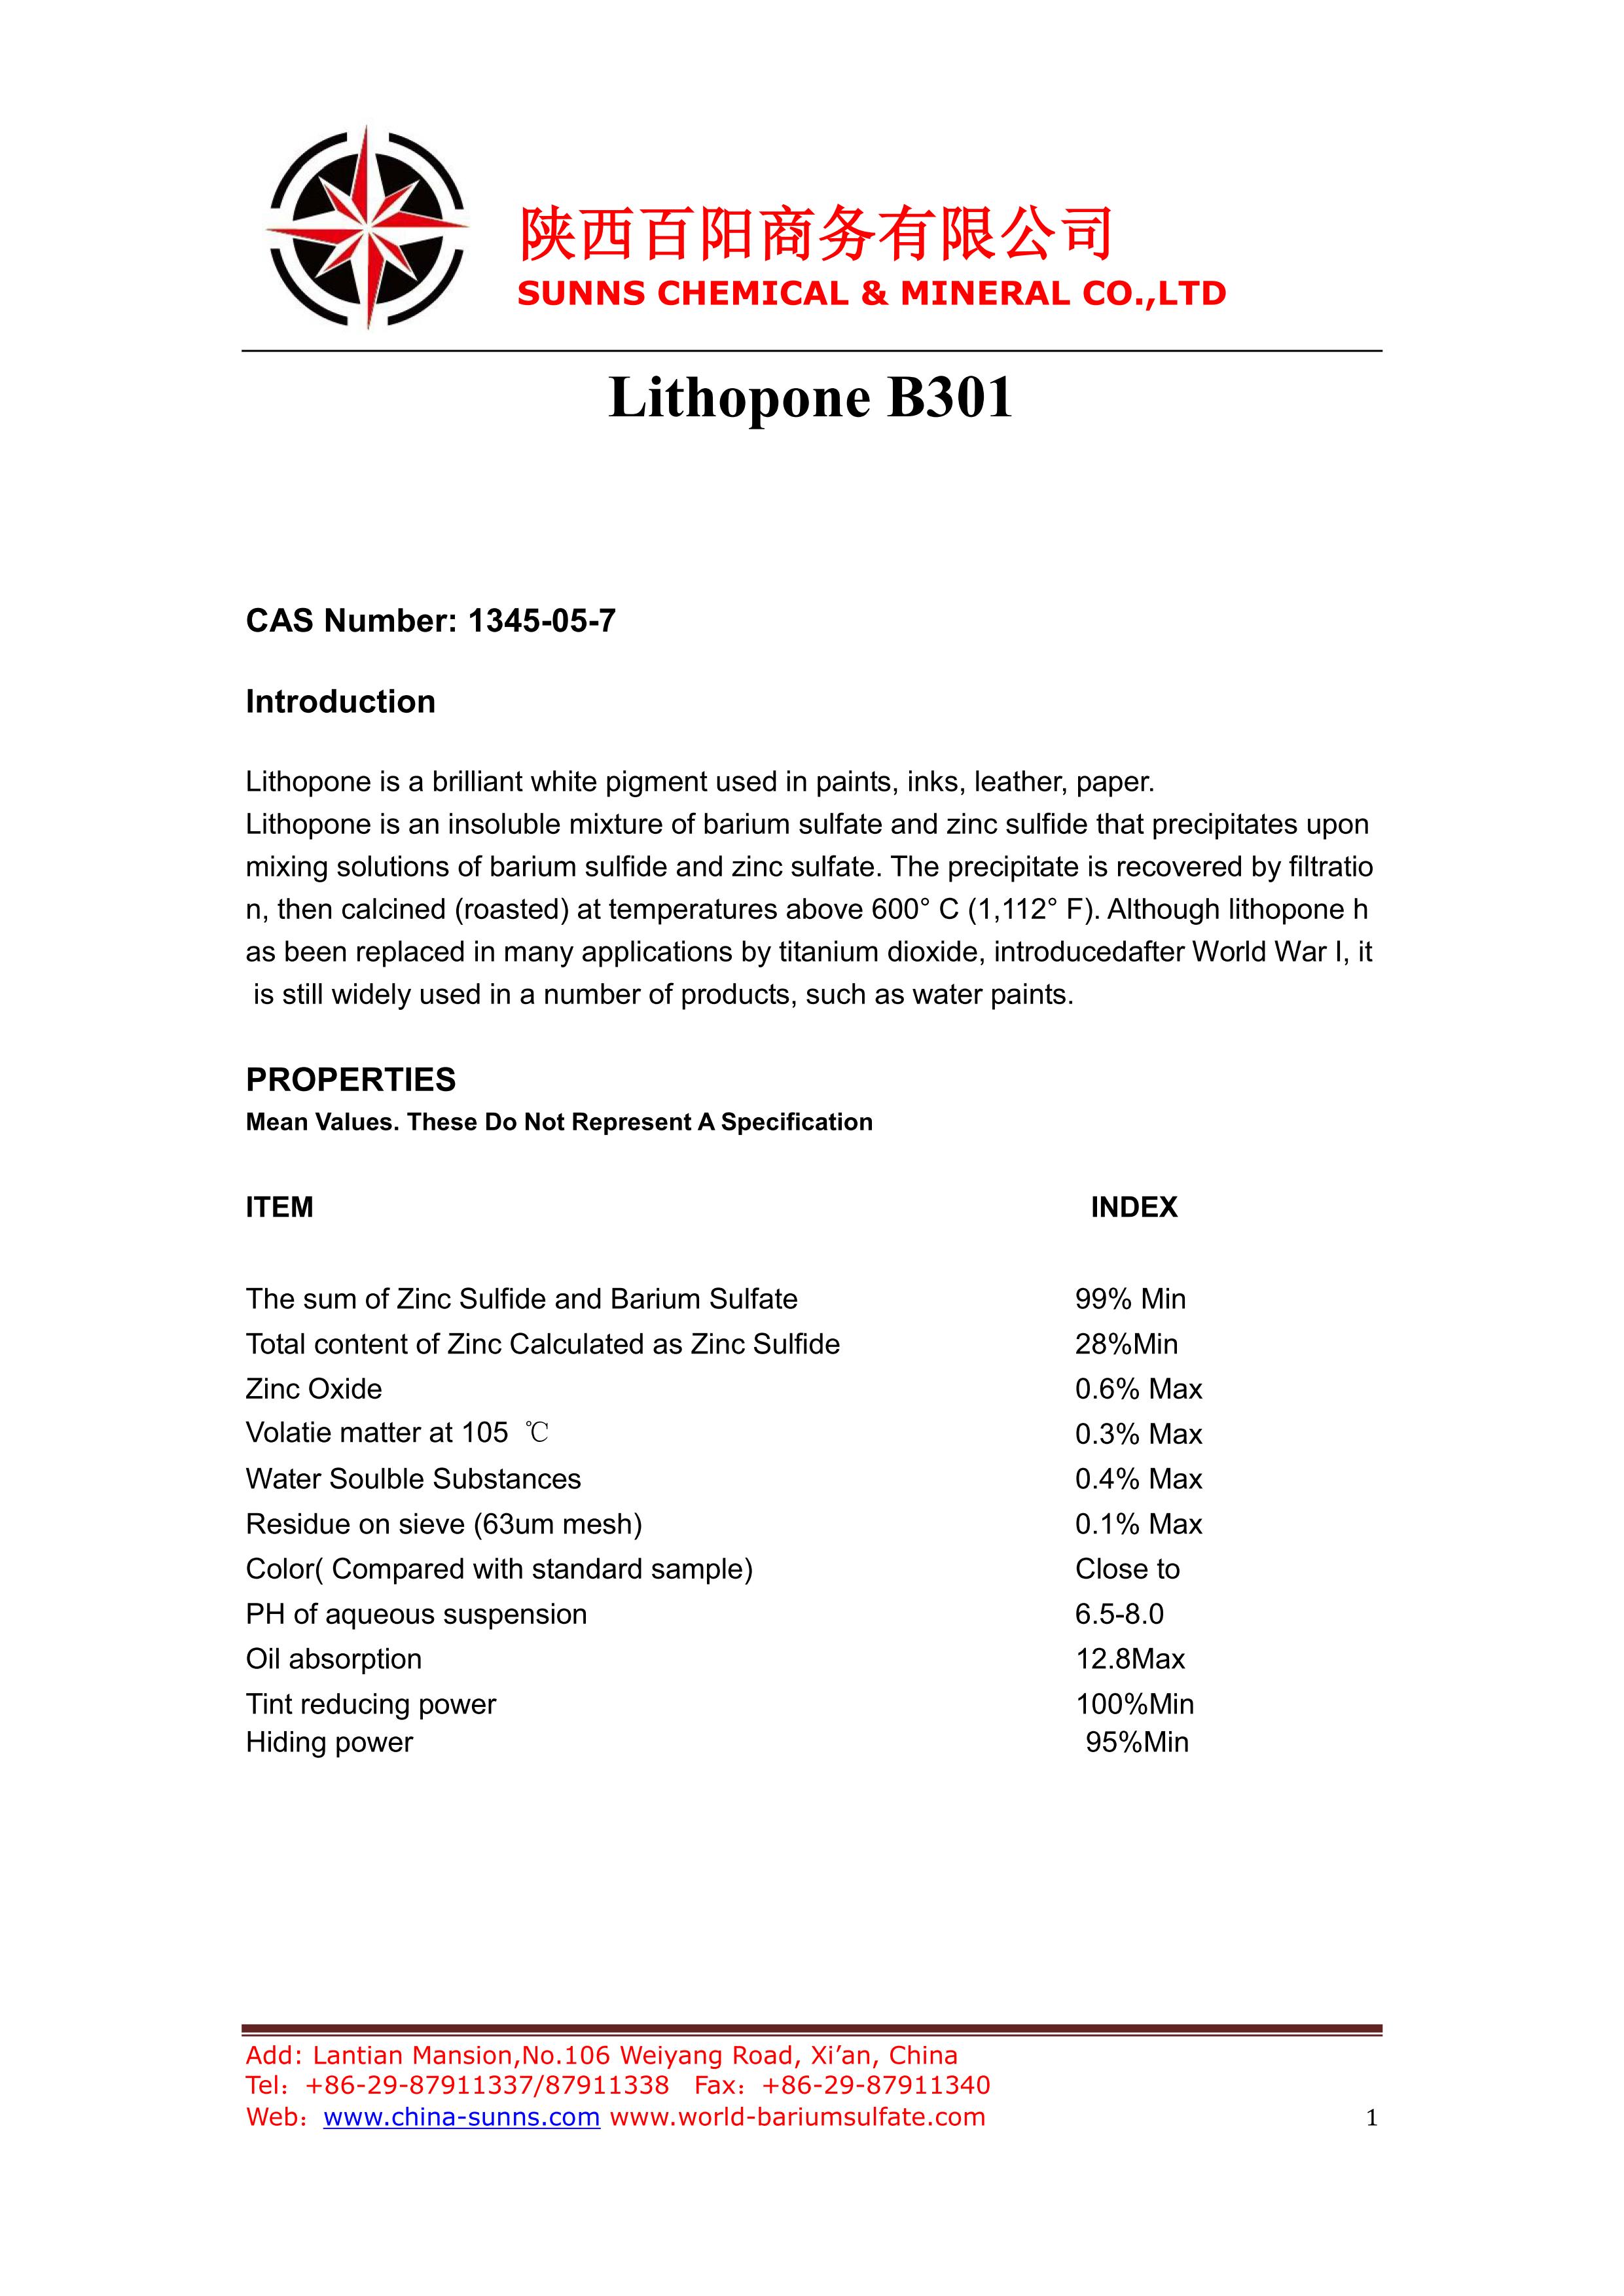 Lithopone B-301